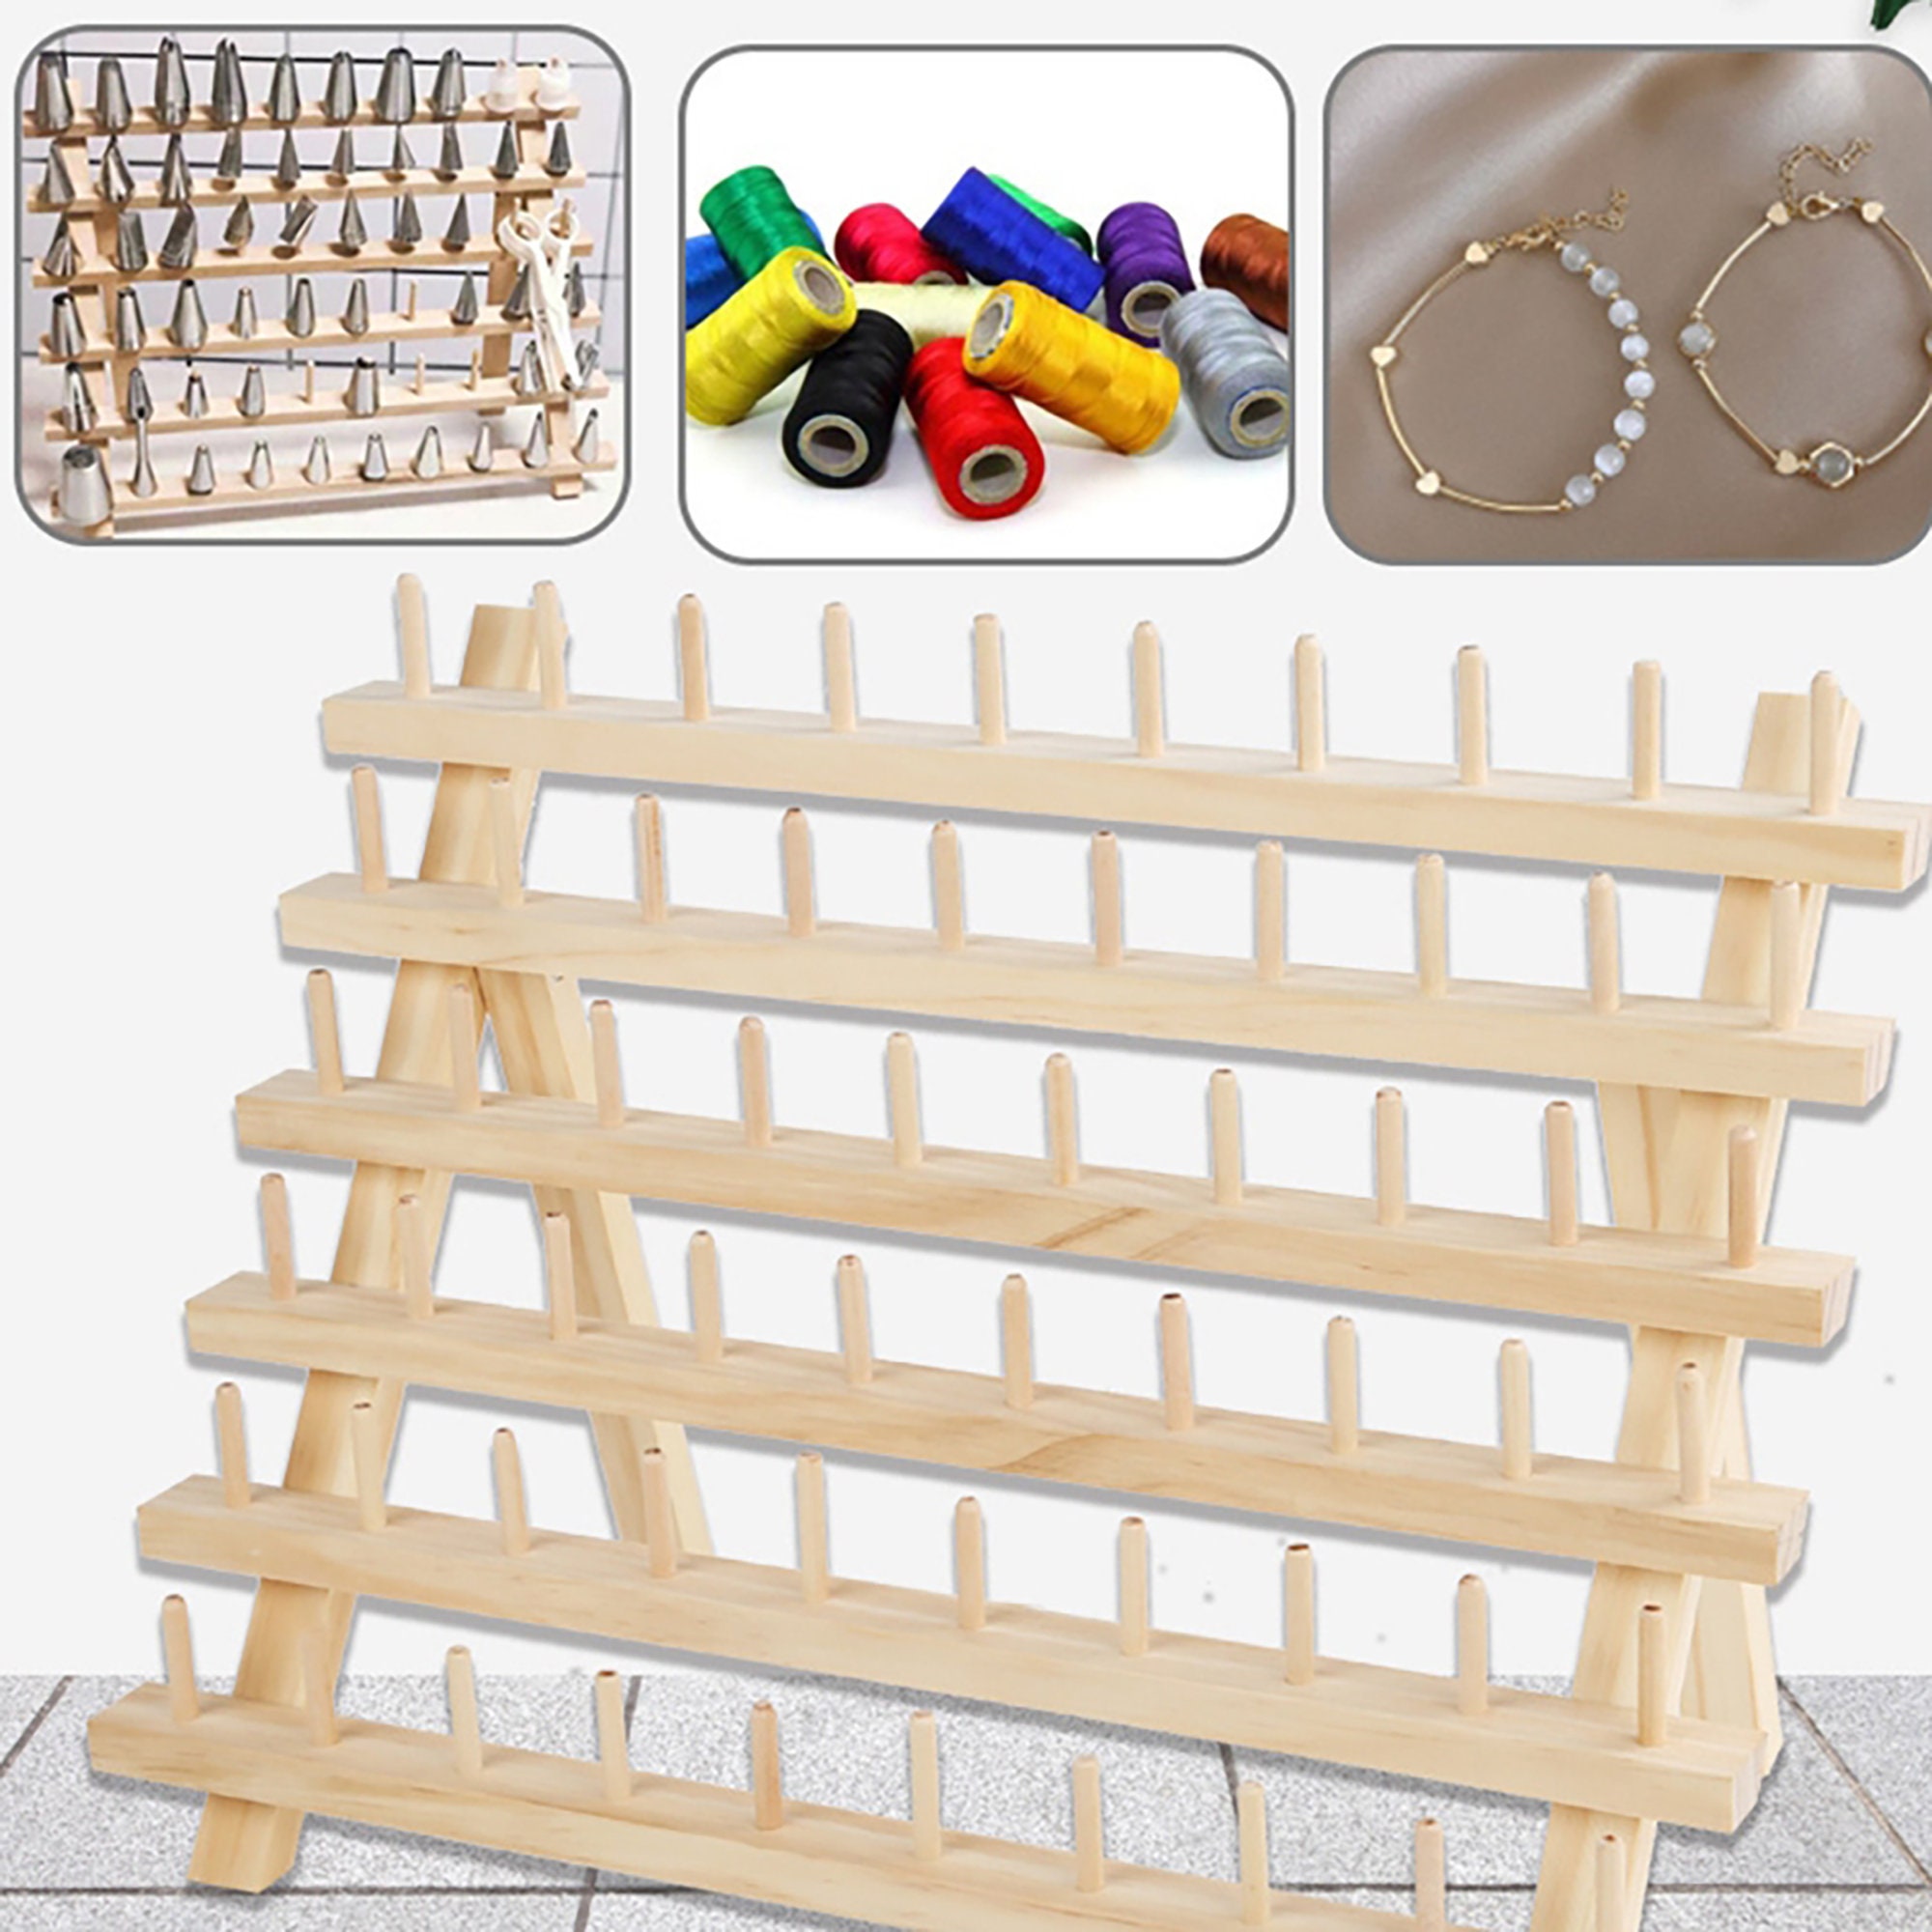  ThreadArt 120 Spool Wood Thread Rack, Made of Hardwood,  Sturdy, Freestanding or Wall Mount